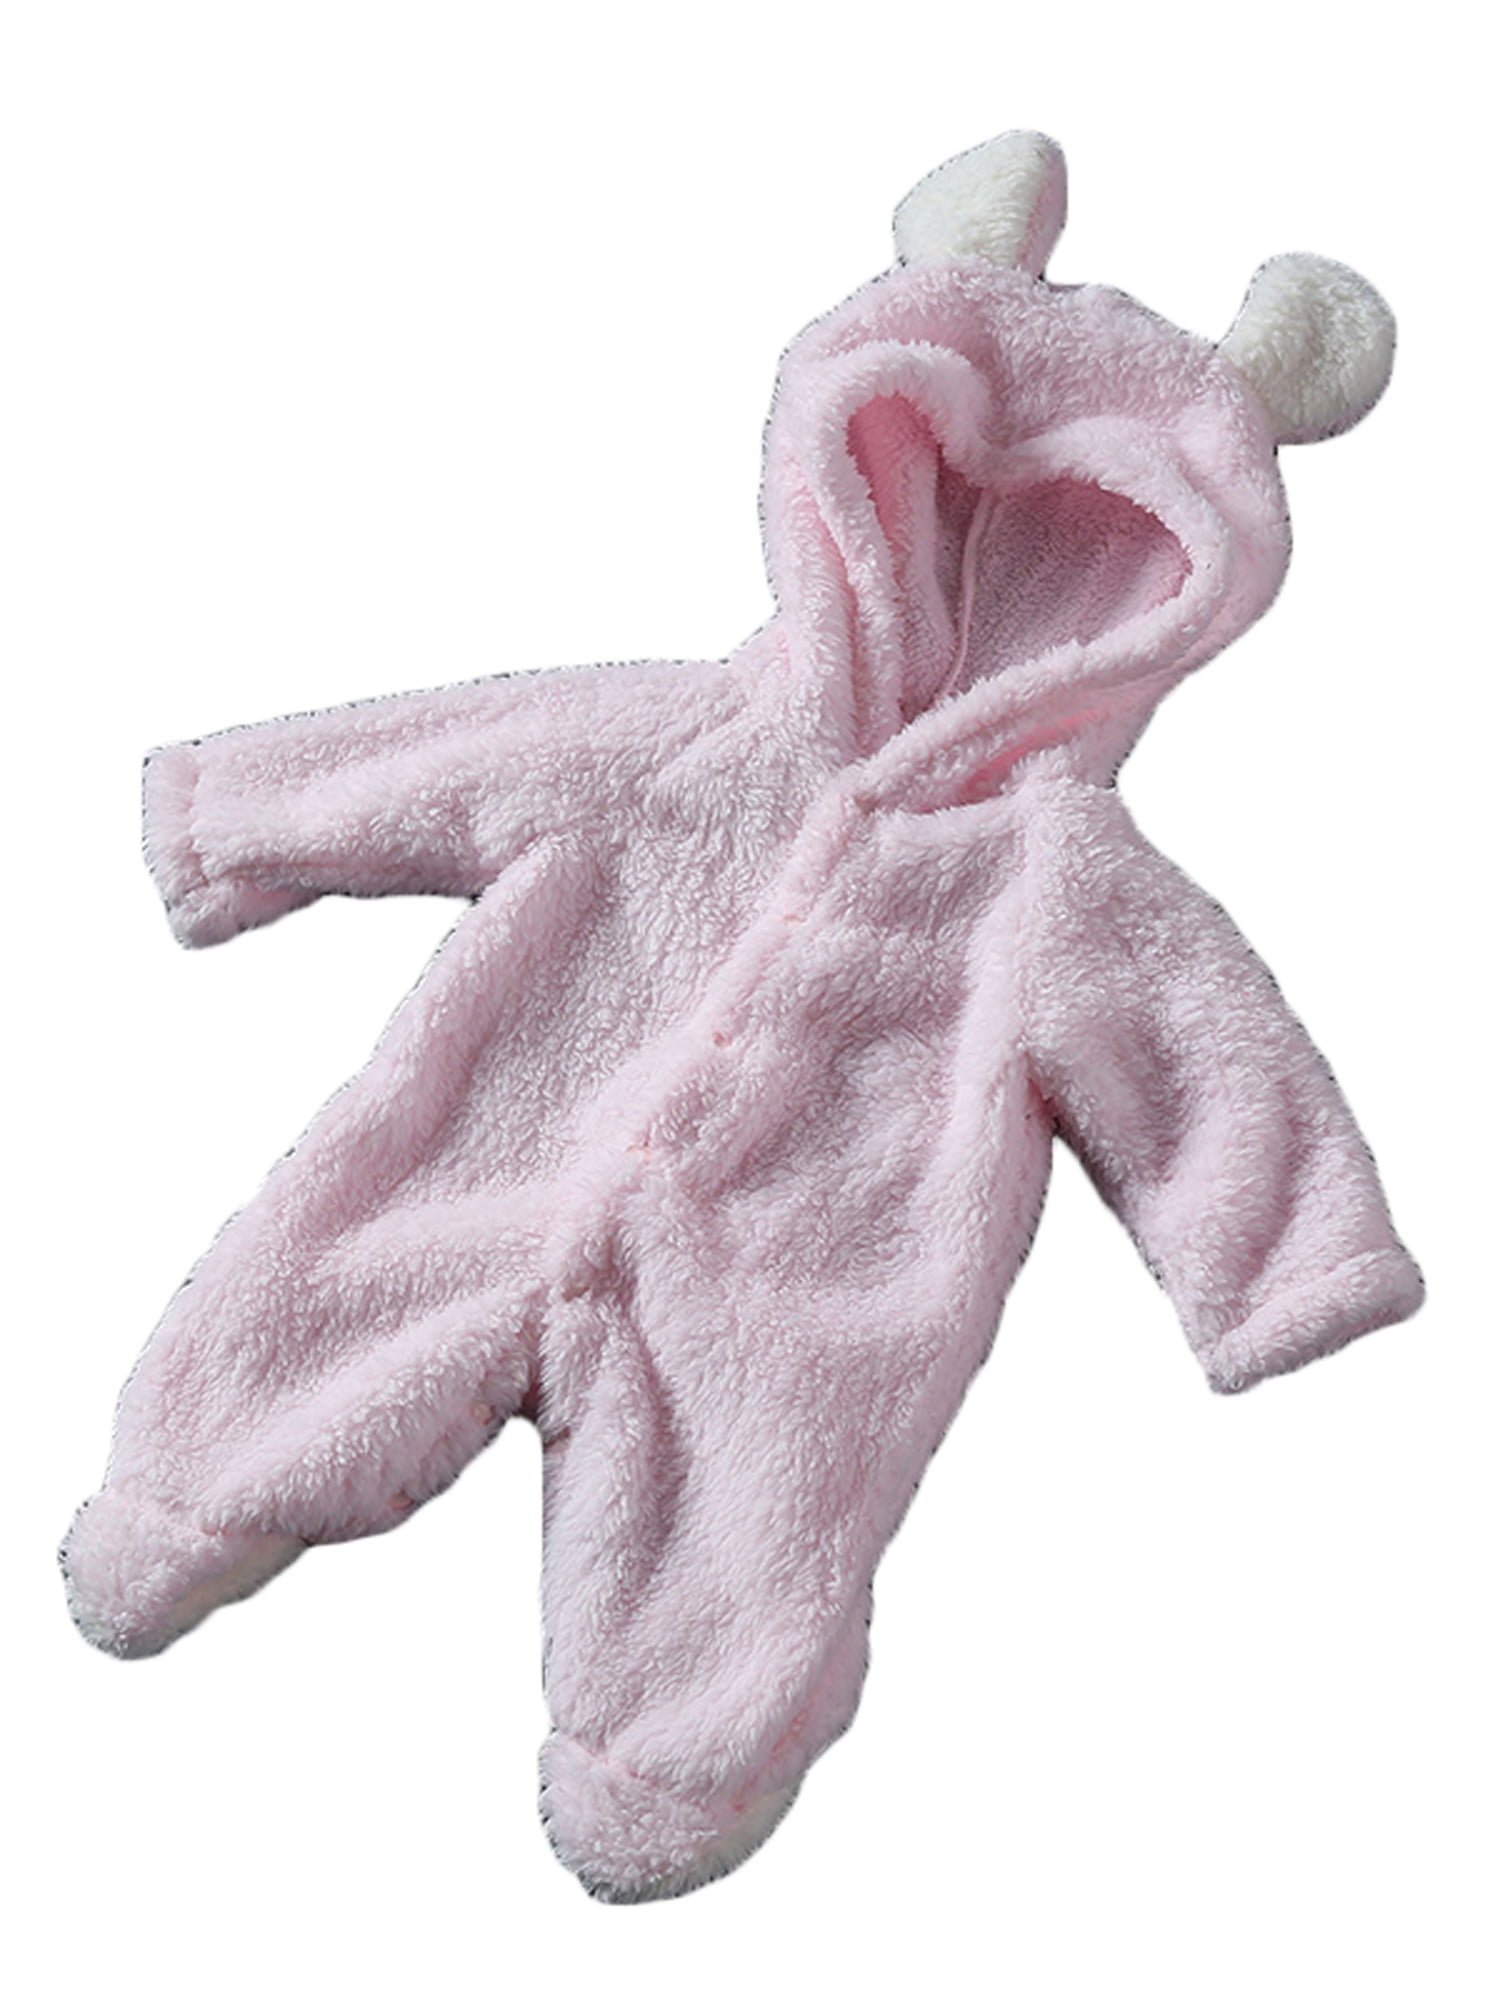 Girls Blanket Check Fleece Hooded Sleepsuit All in One Romper 4 to 10 Years 